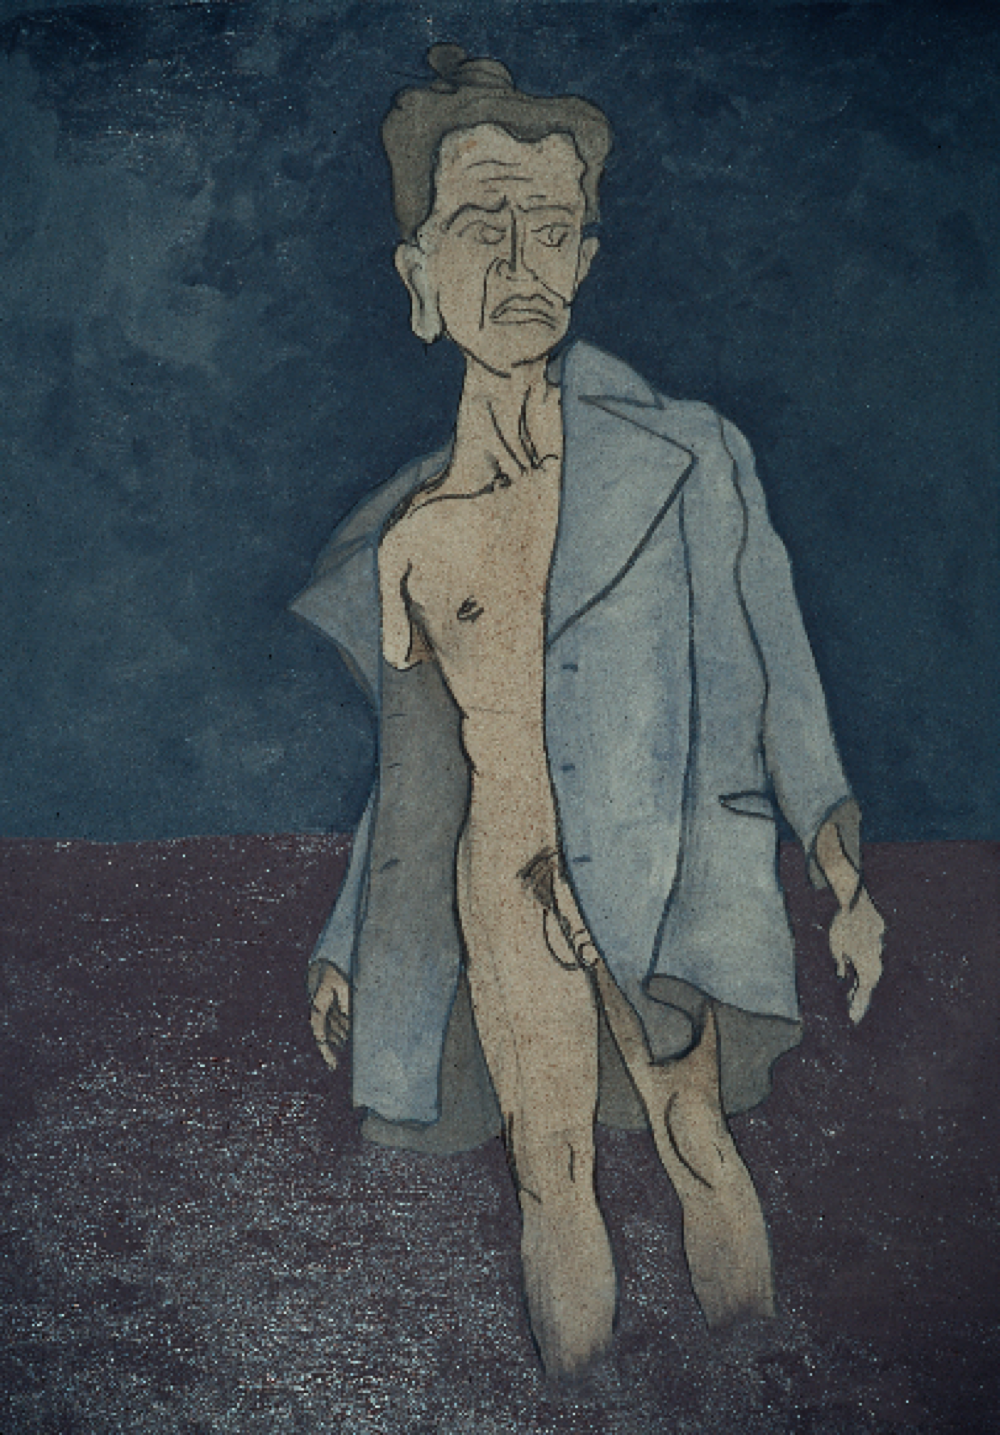 Oil painting of figure in coat